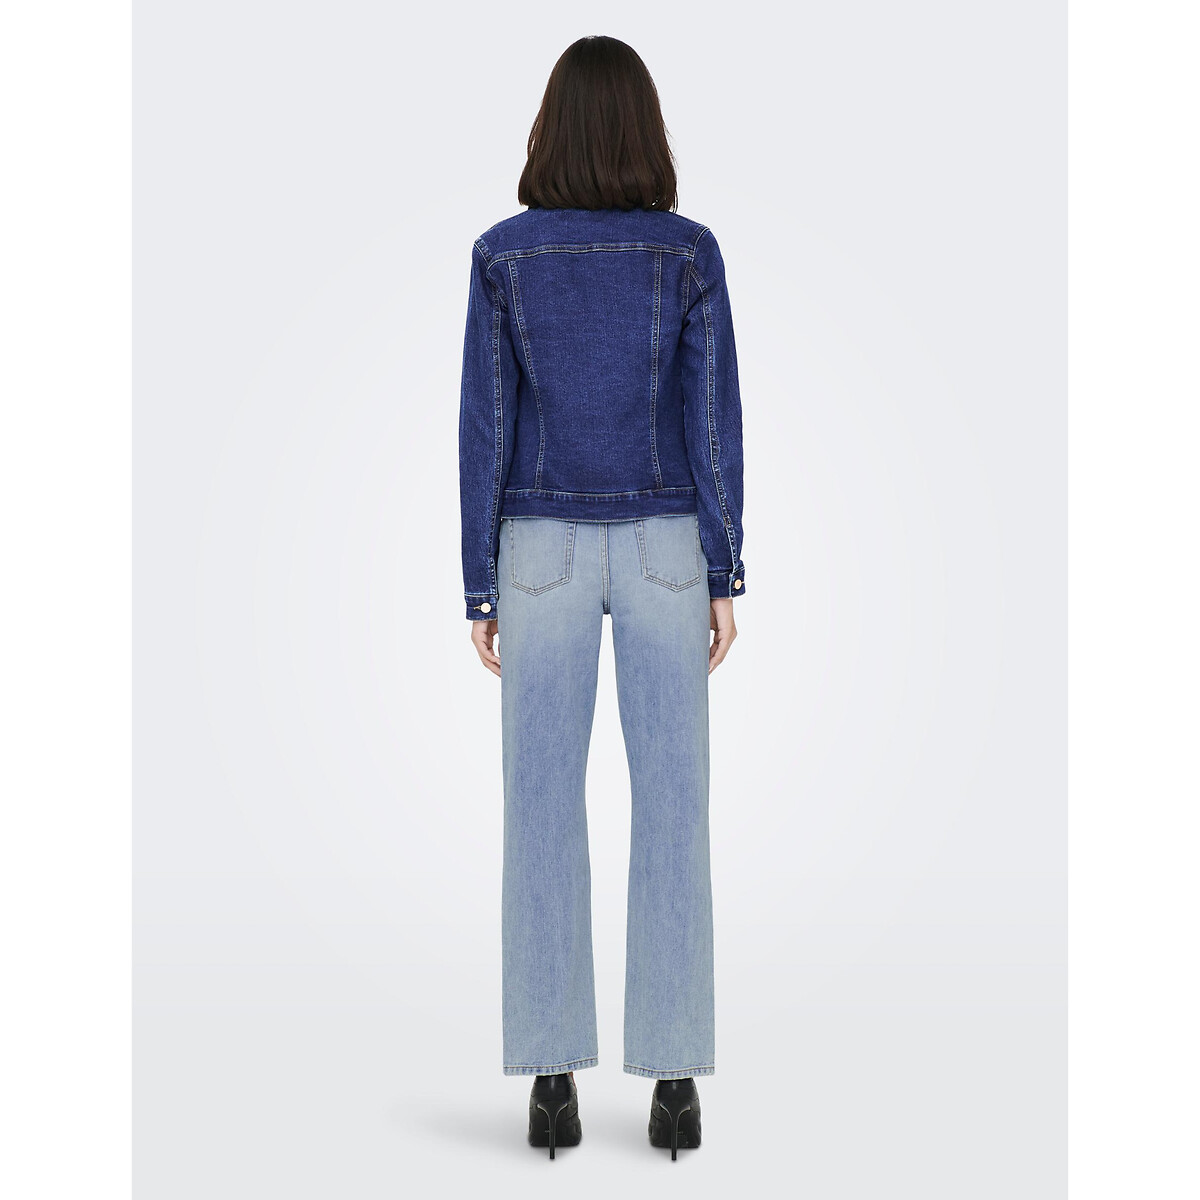 Жакет Из джинсовой ткани L синий LaRedoute, размер L - фото 4